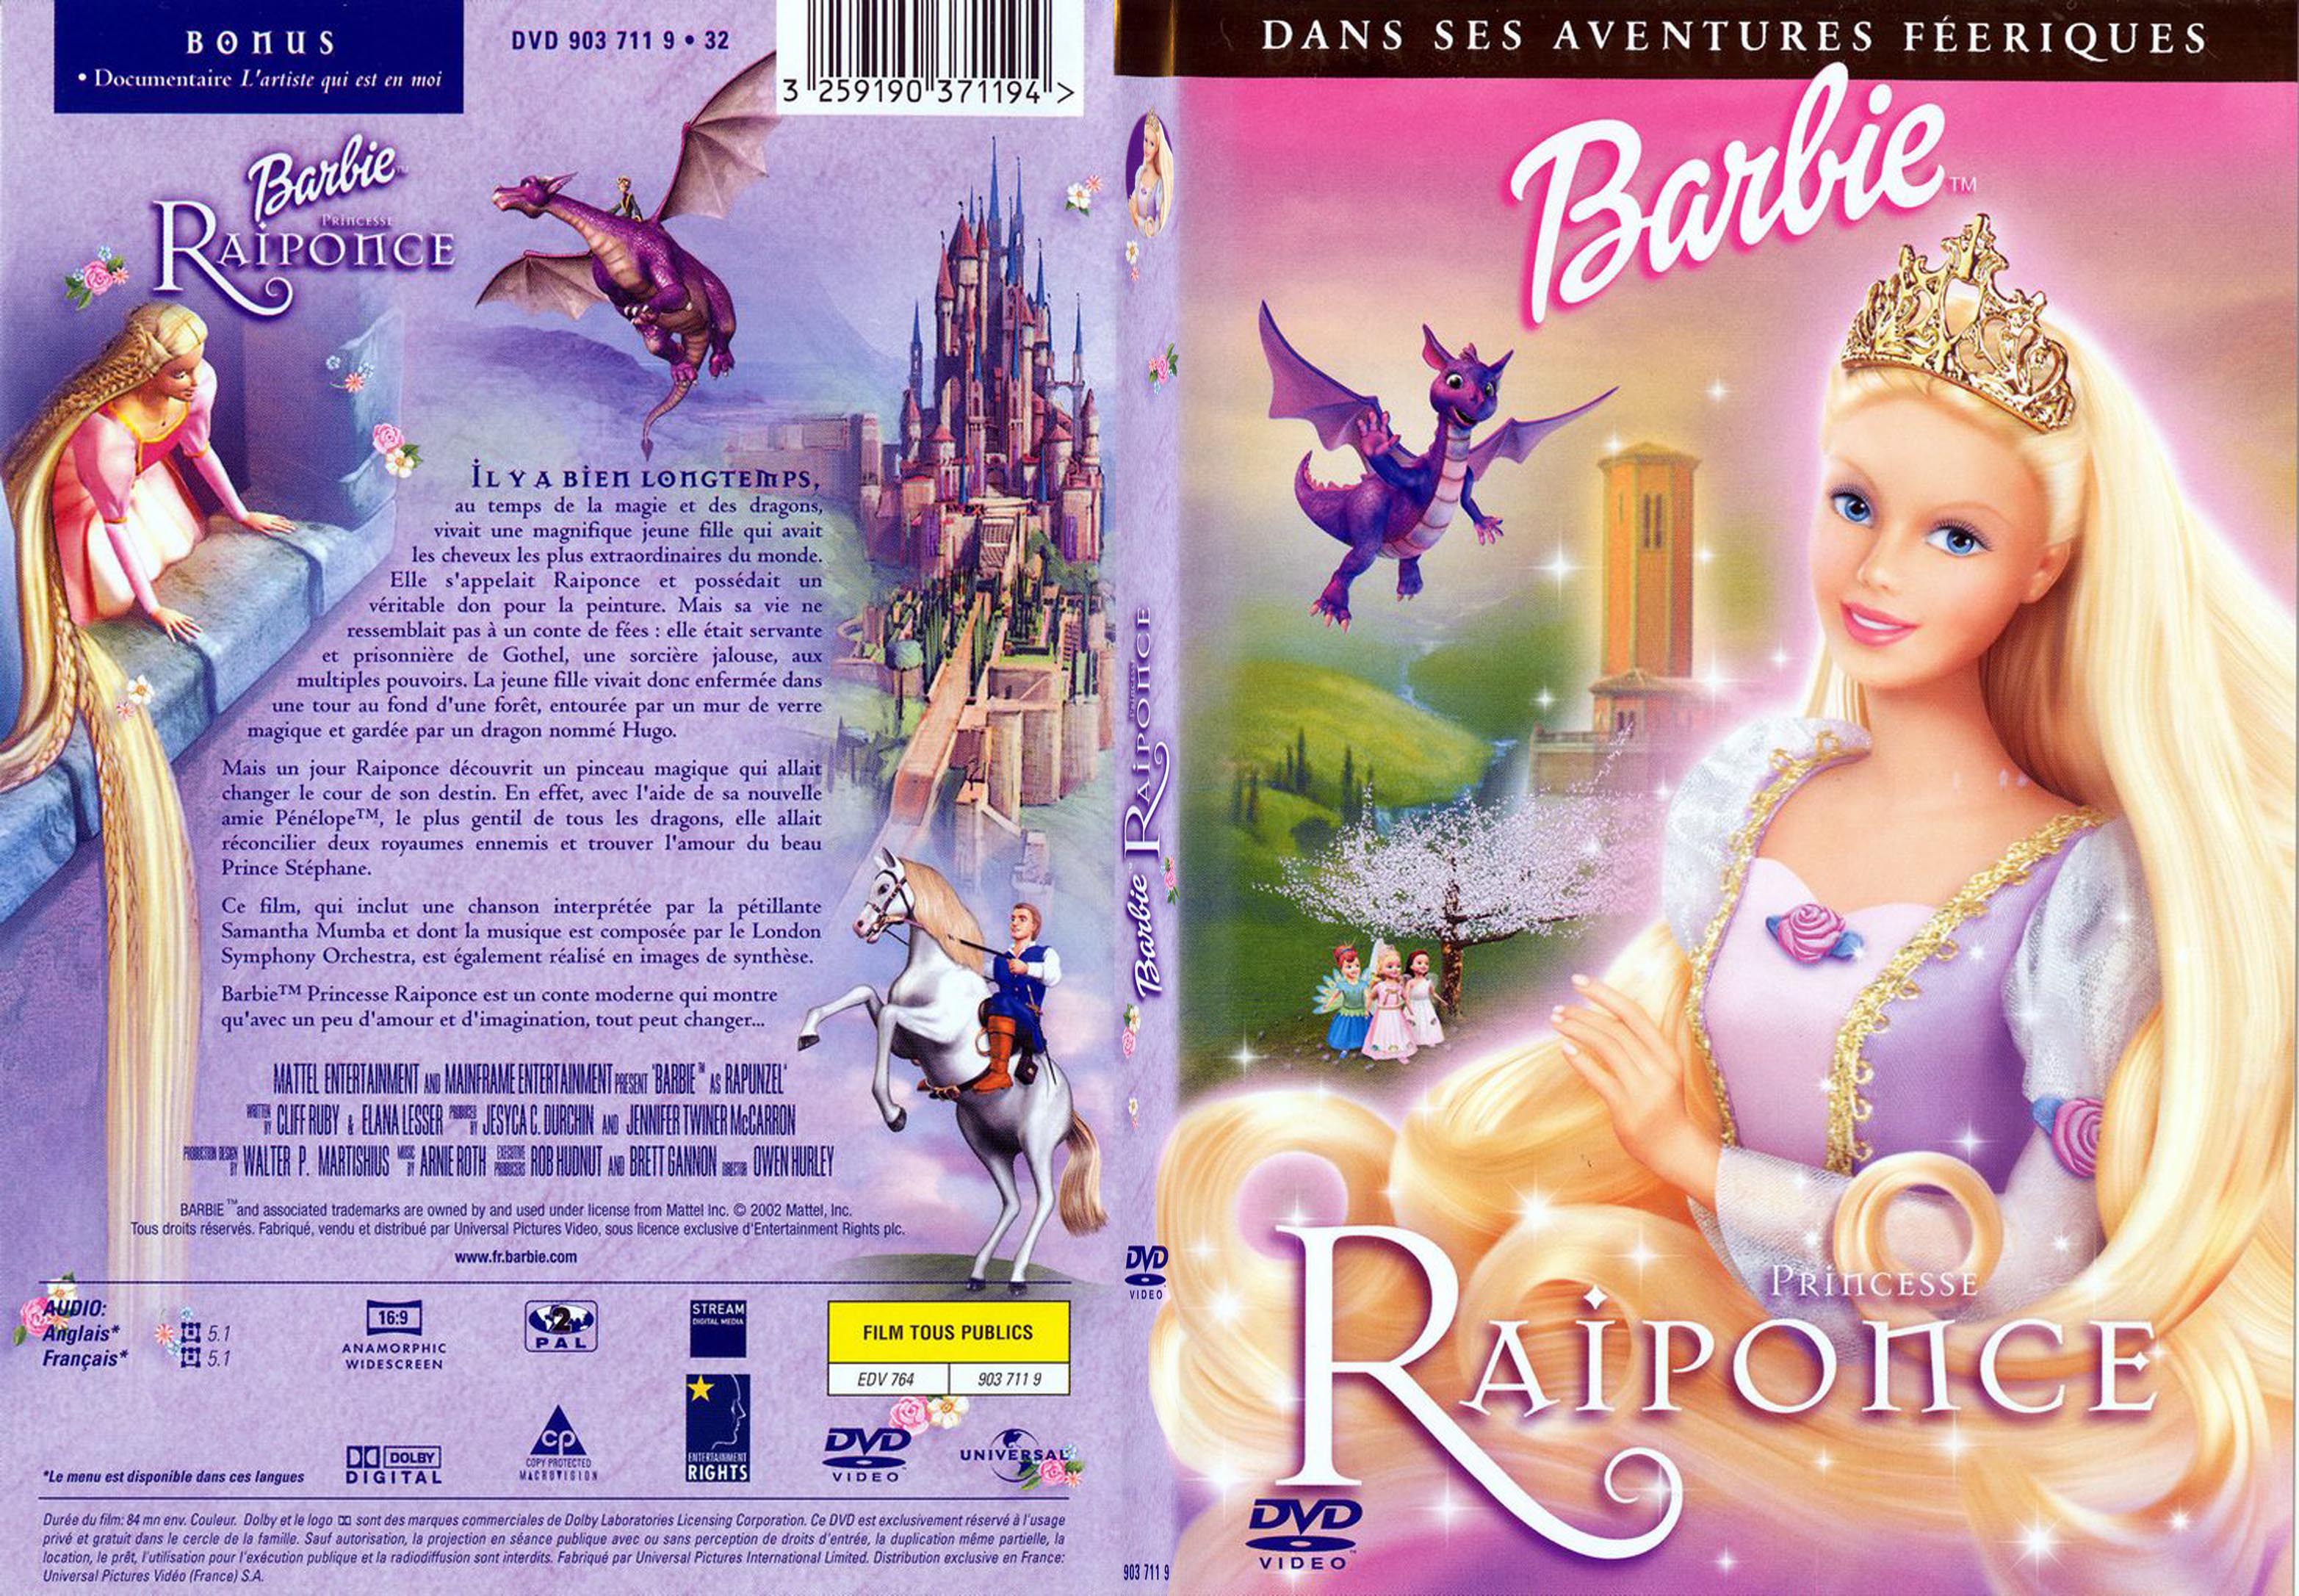 Jaquette DVD Barbie Princesse raiponce - SLIM